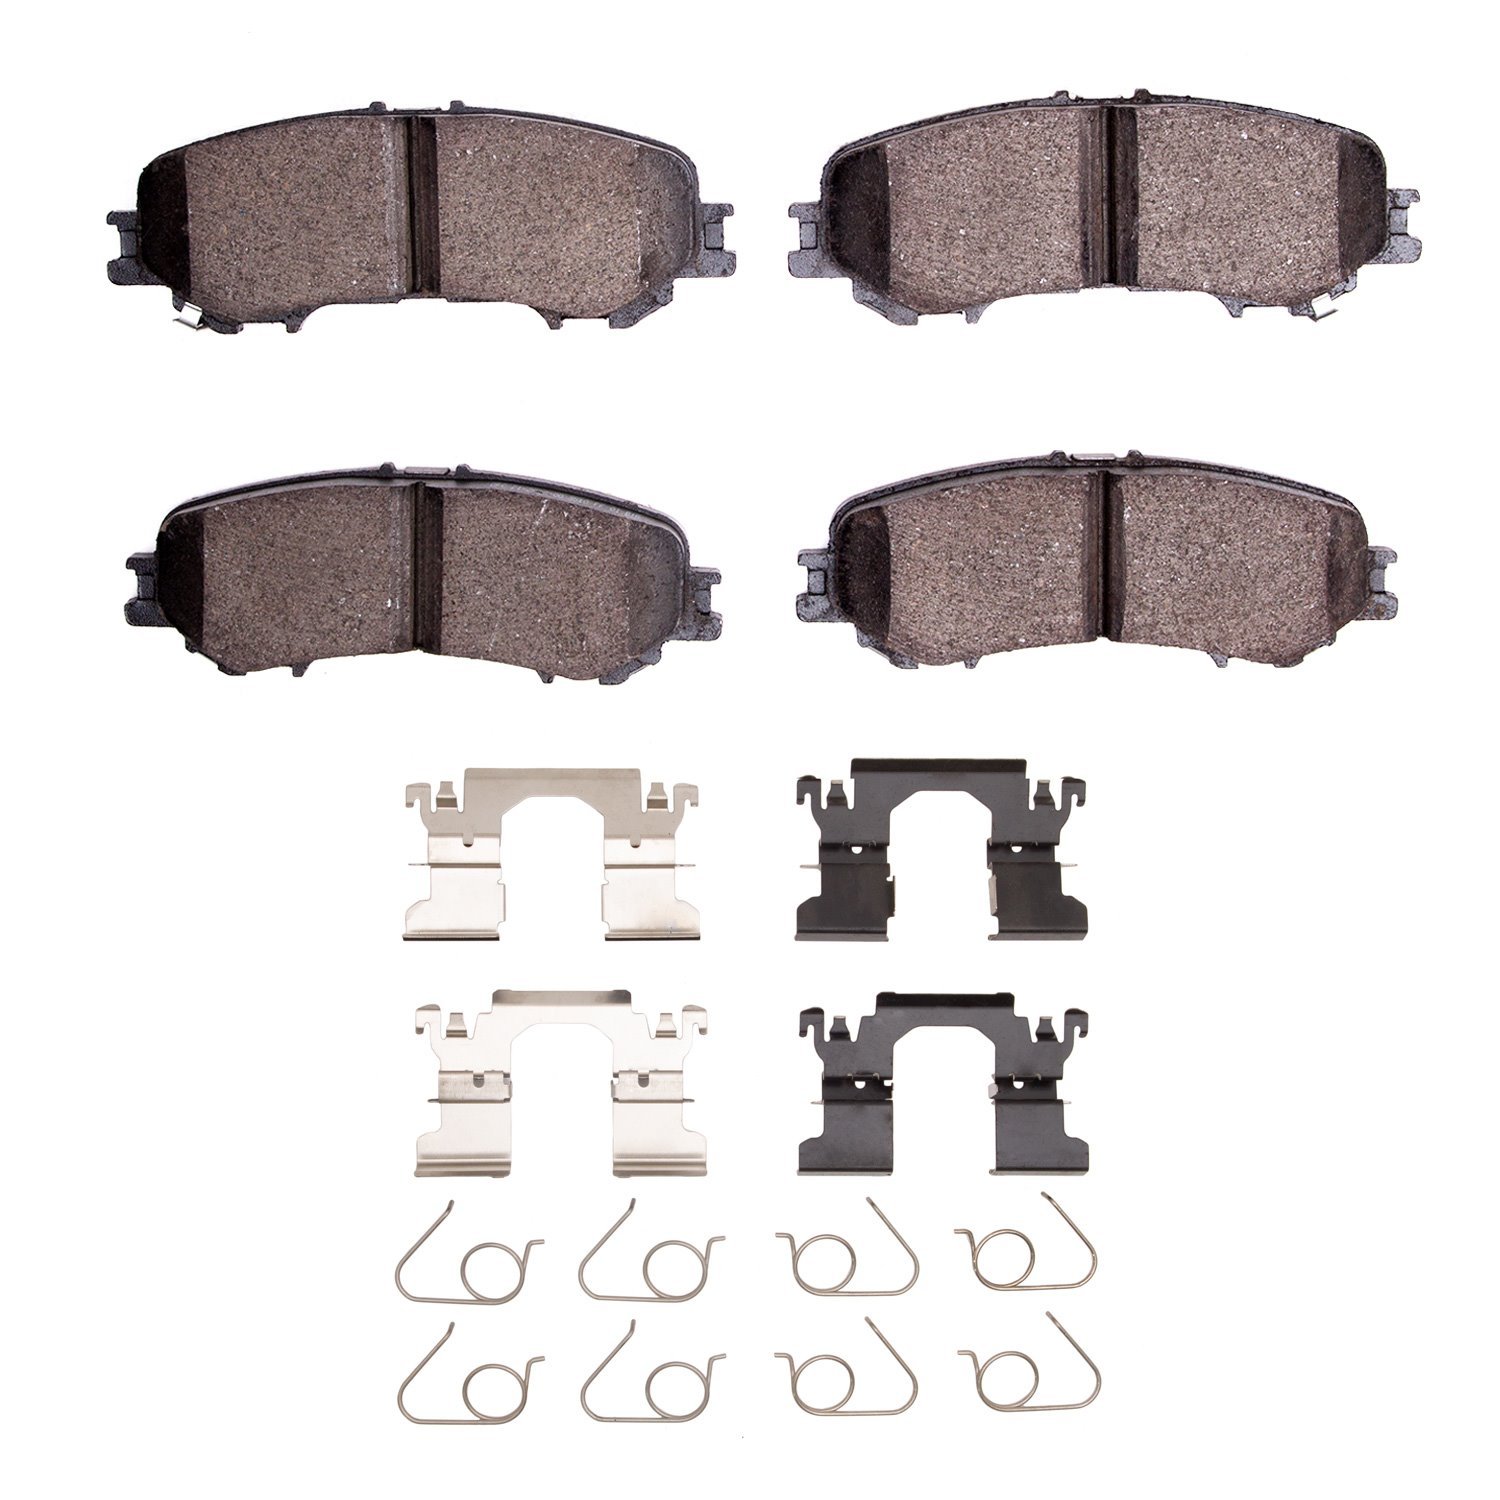 1310-2032-01 3000-Series Ceramic Brake Pads & Hardware Kit, Fits Select Infiniti/Nissan, Position: Rear